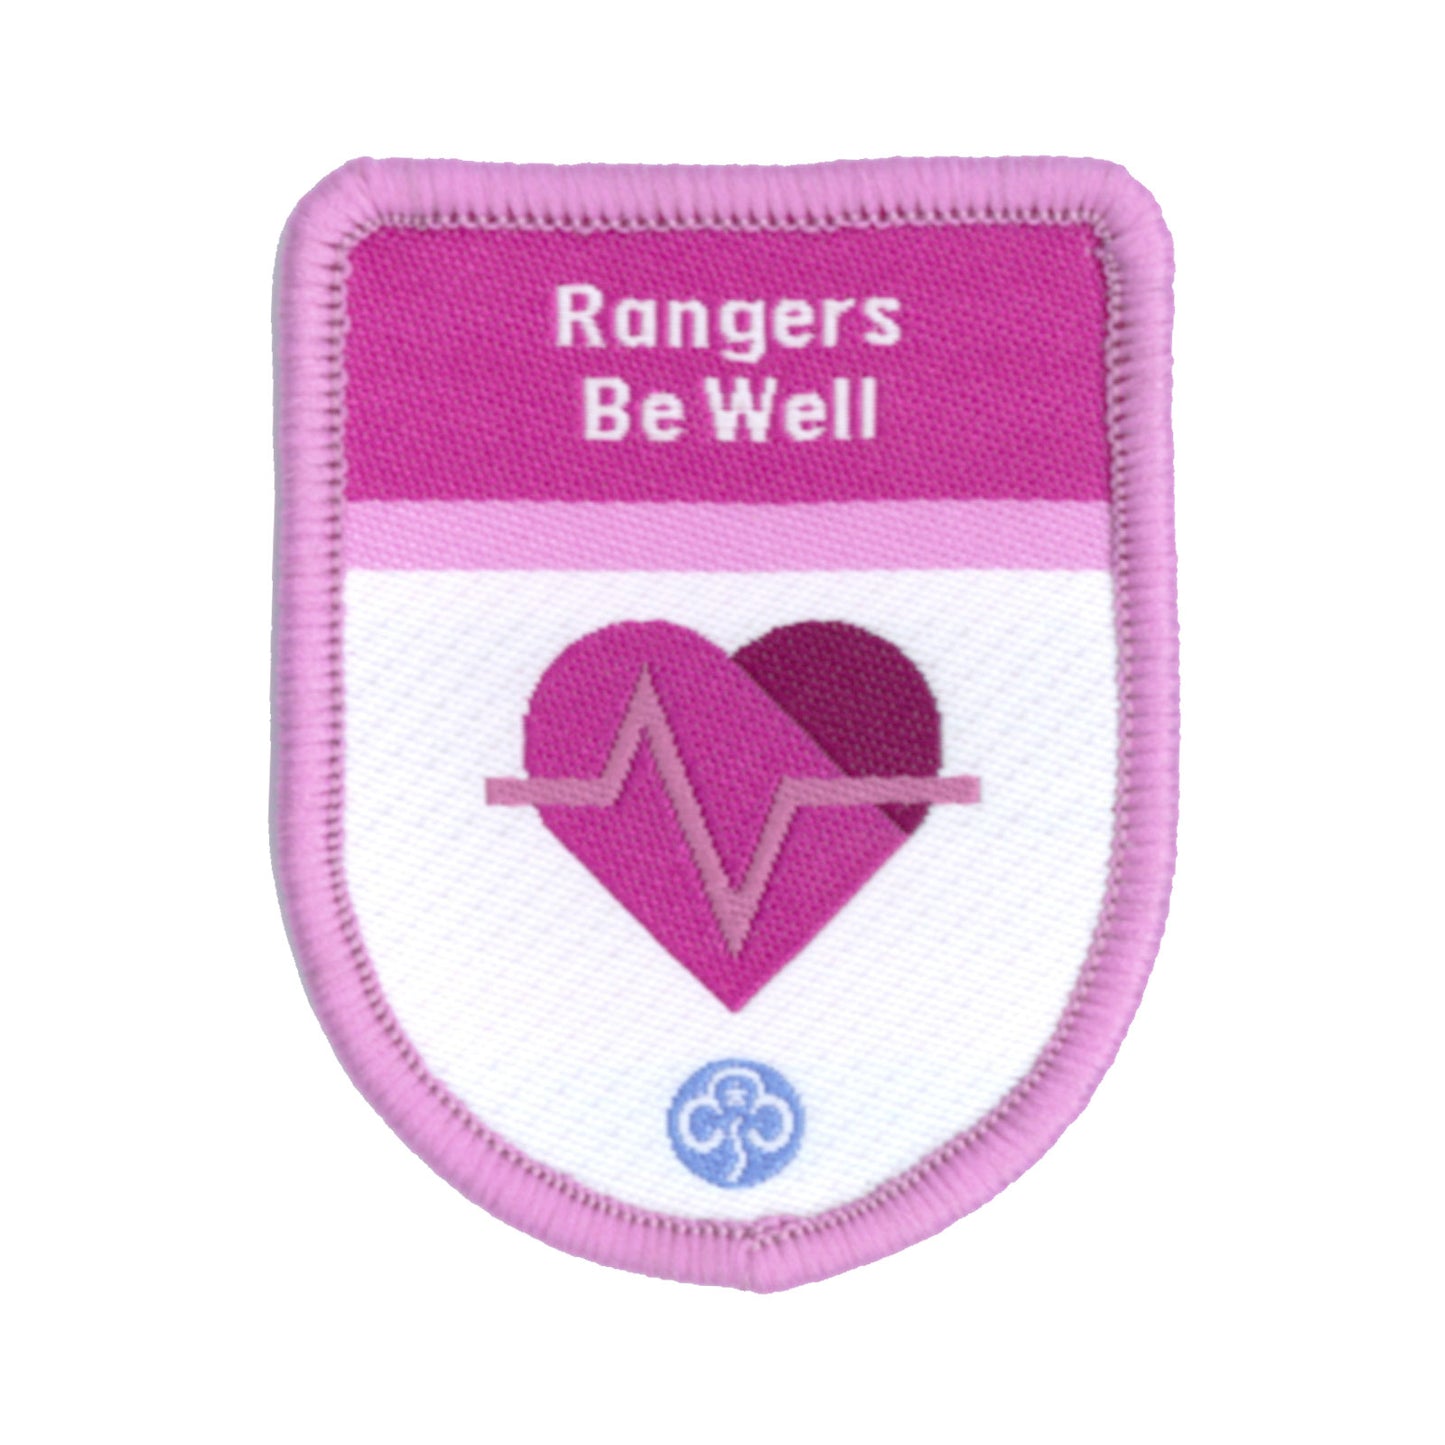 Rangers Be Well Theme Award Woven Badge